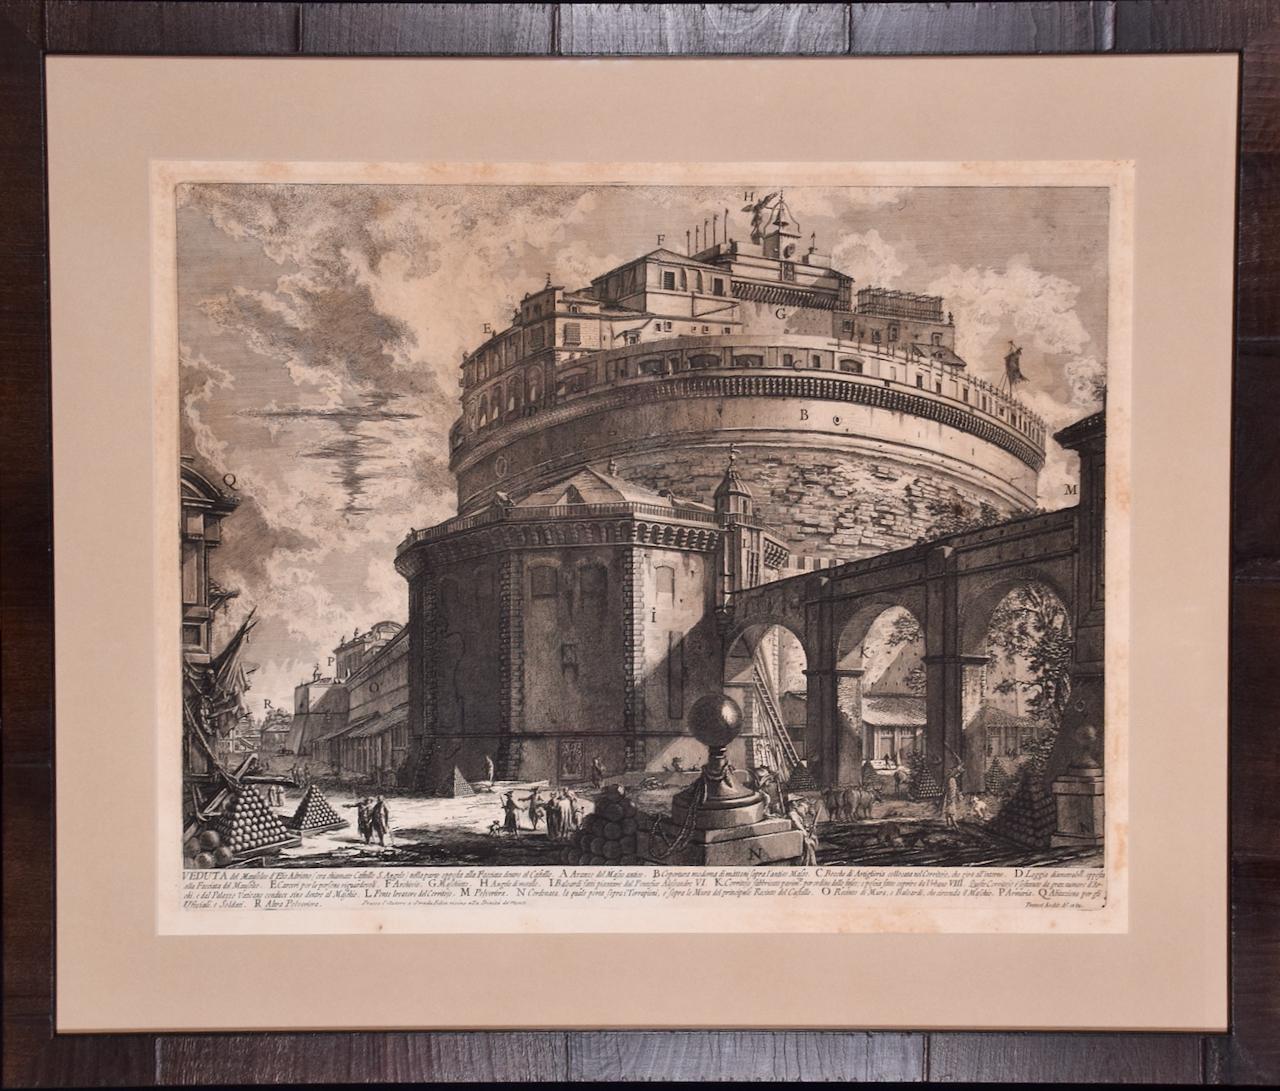 Giovanni Battista Piranesi Landscape Print - Hadrian's Mausoleum, Castel S. Angelo: A Framed 18th Century Etching by Piranesi